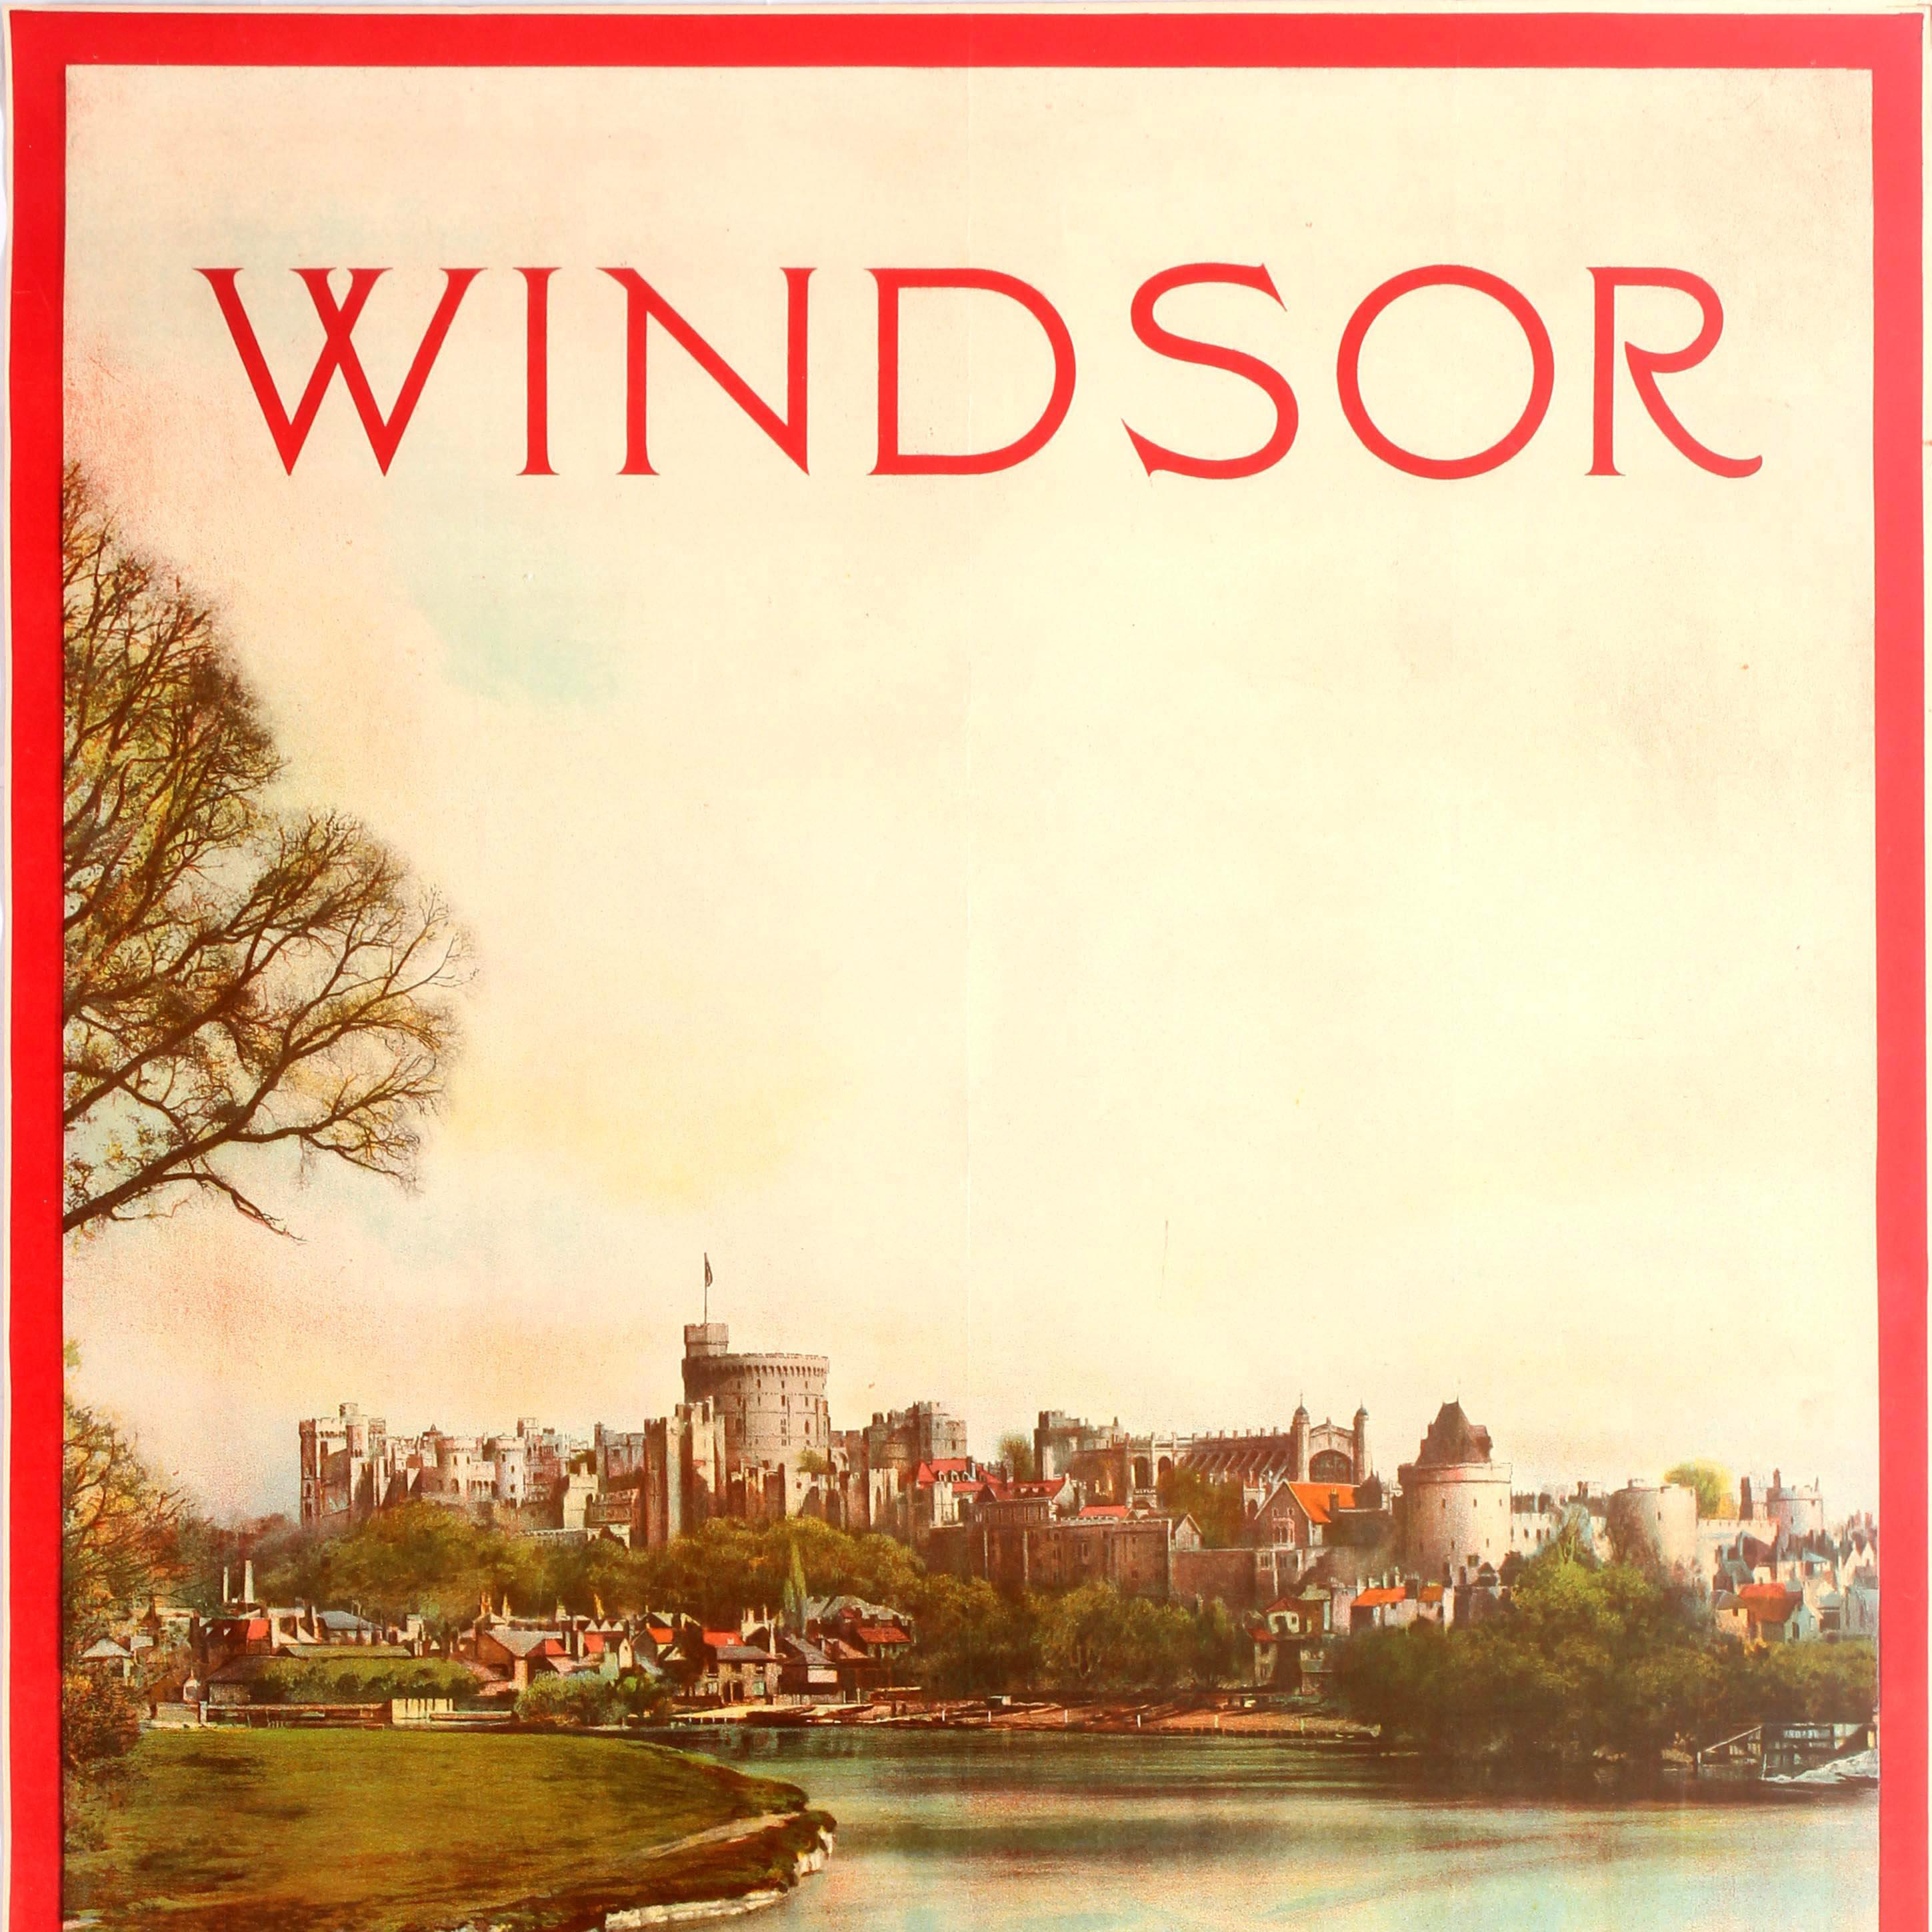 British Original Vintage Southern Railway Travel Poster Featuring Windsor Castle England For Sale